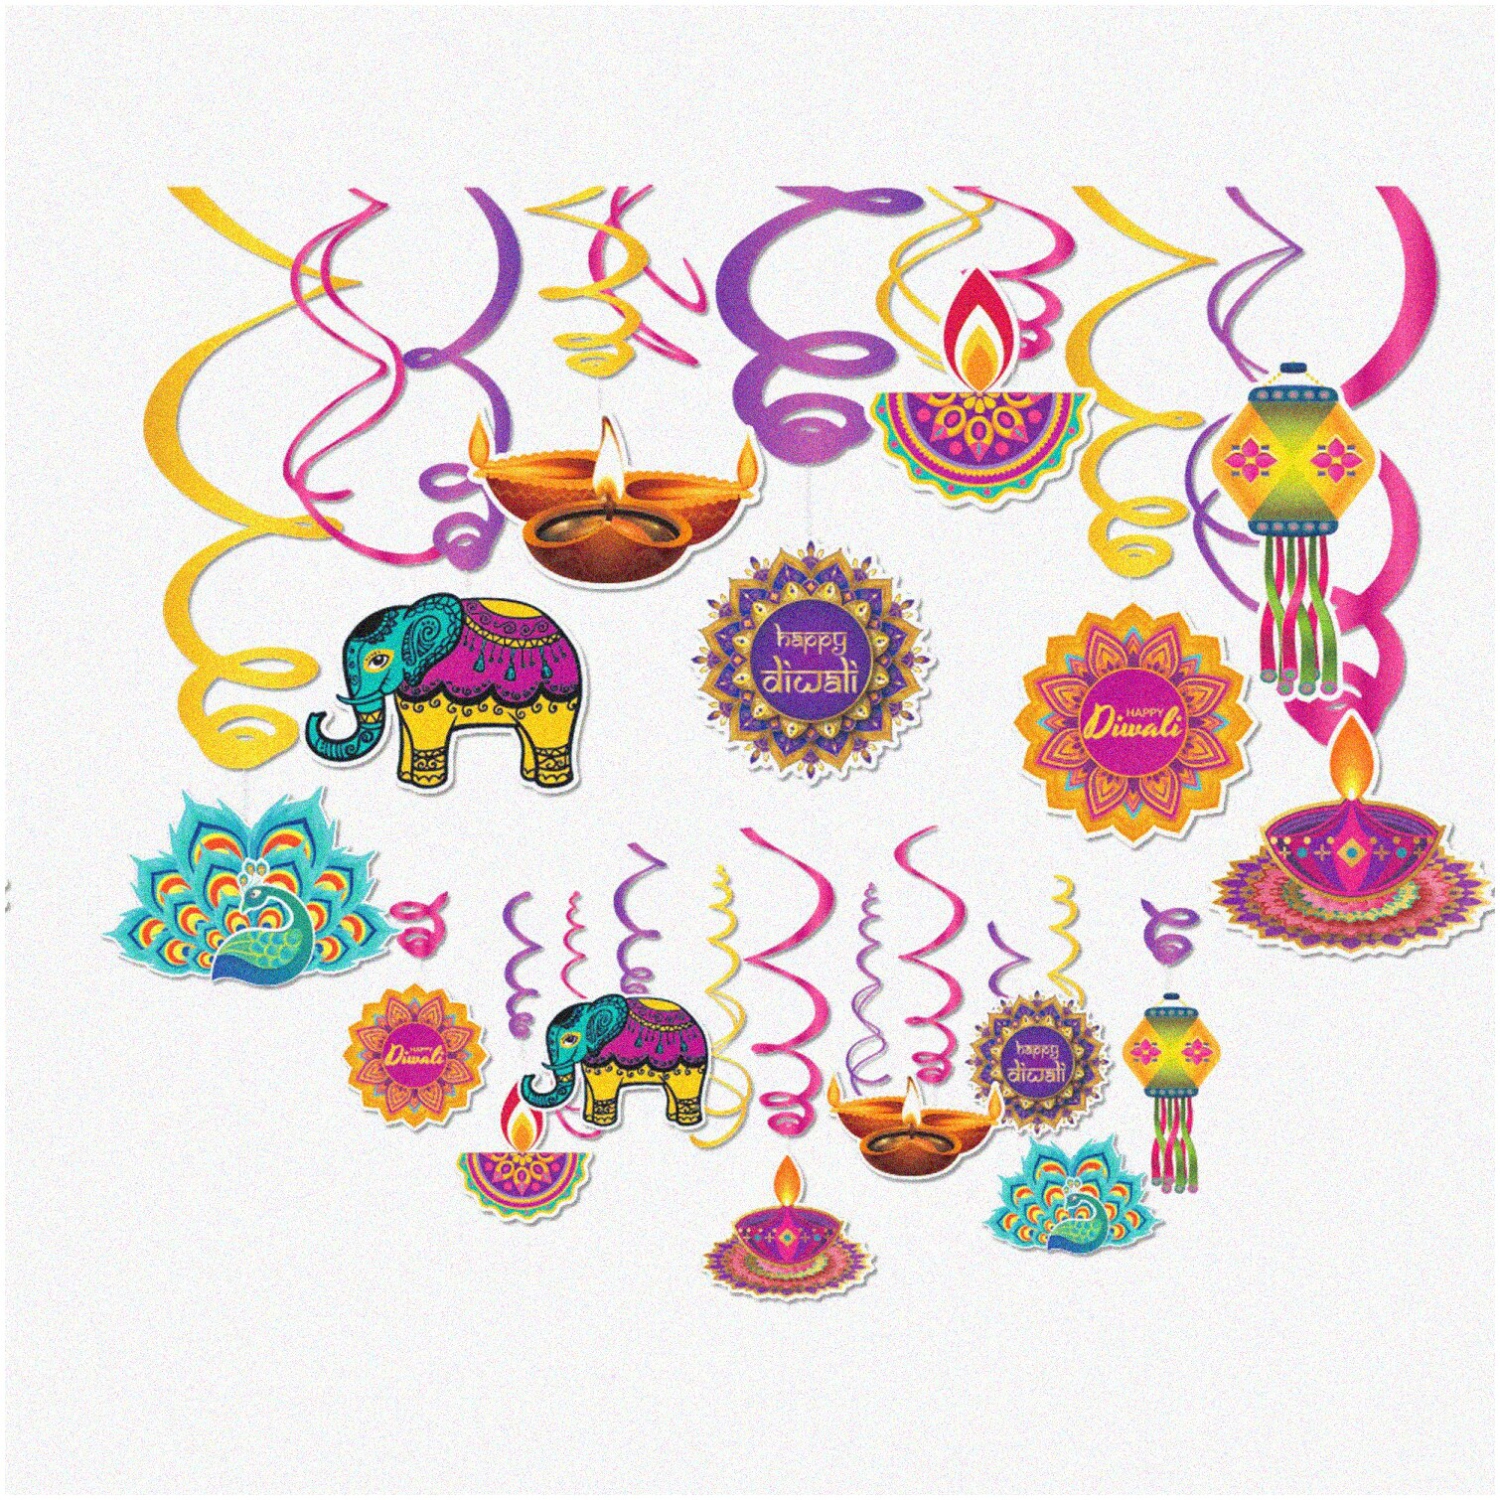 Diwali Delight Swirls - 30pcs Festive Hanging Decorations for India's Festival of Lights, Deepawali Party Décor